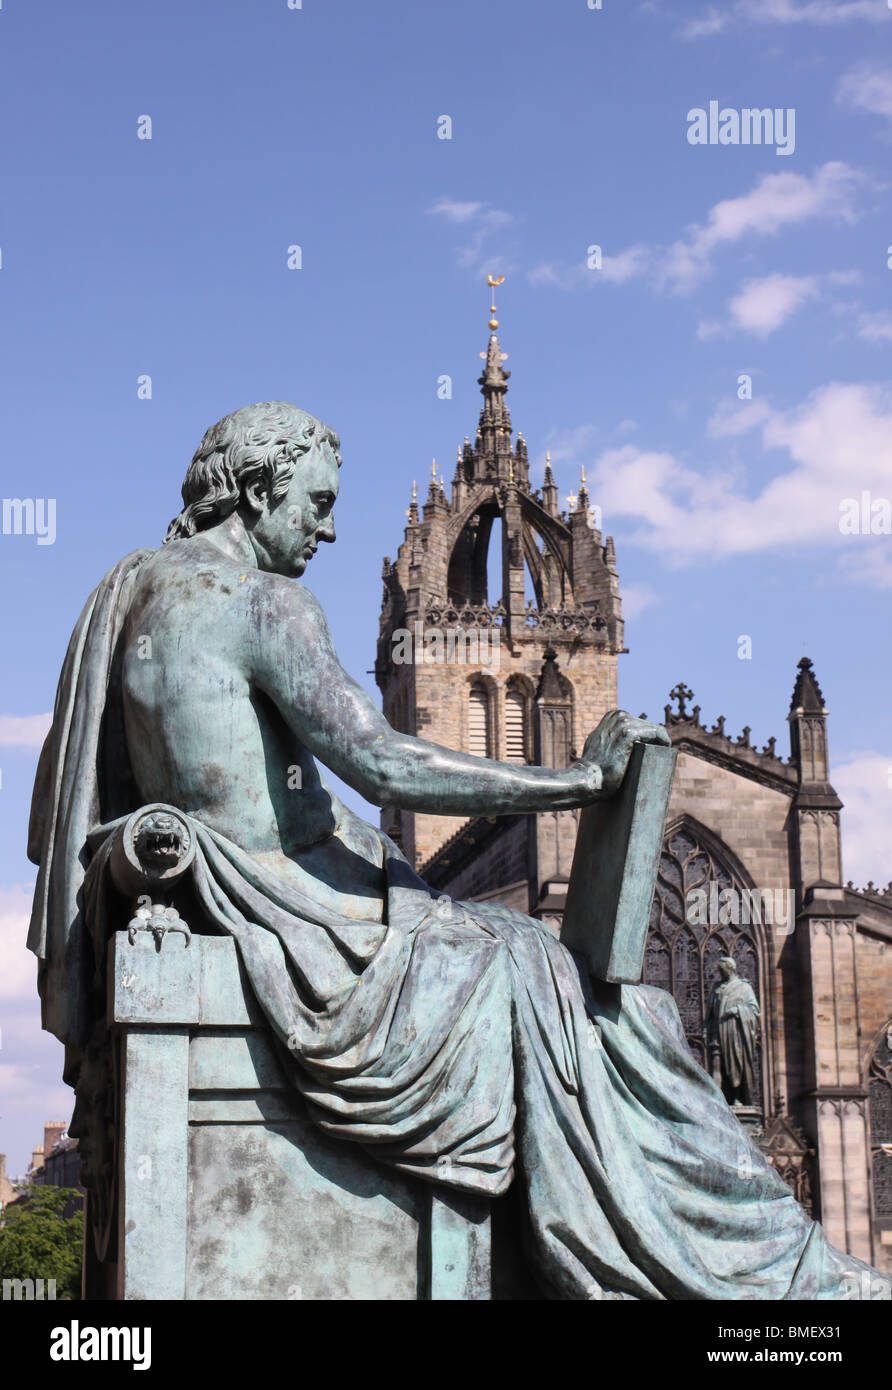 Statue des Philosophen David Hume an Royal Mile mit St Giles Cathedral Edinburgh Schottland Juni 2010 Stockfoto